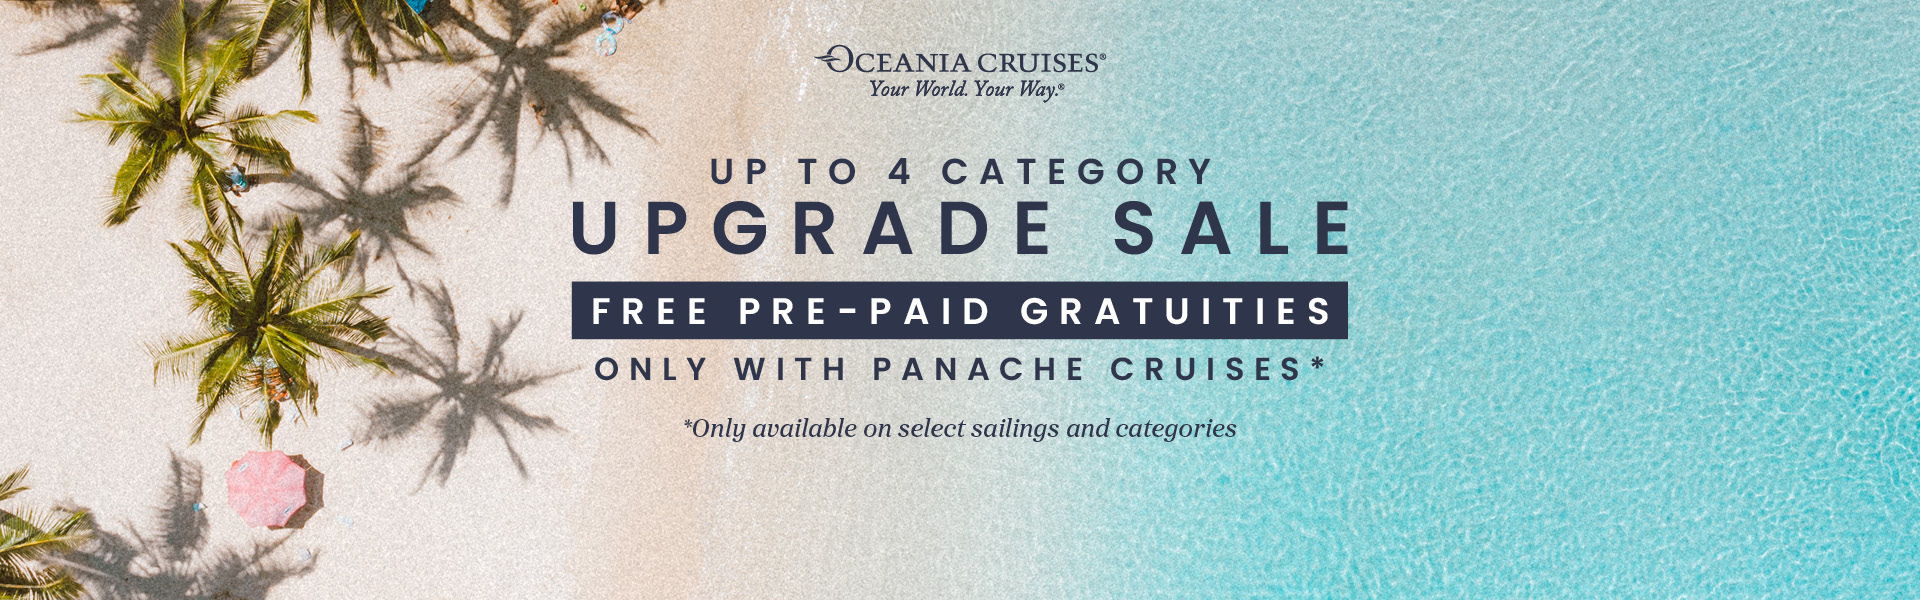 Oceania Cruises 4 Category Upgrade Sale